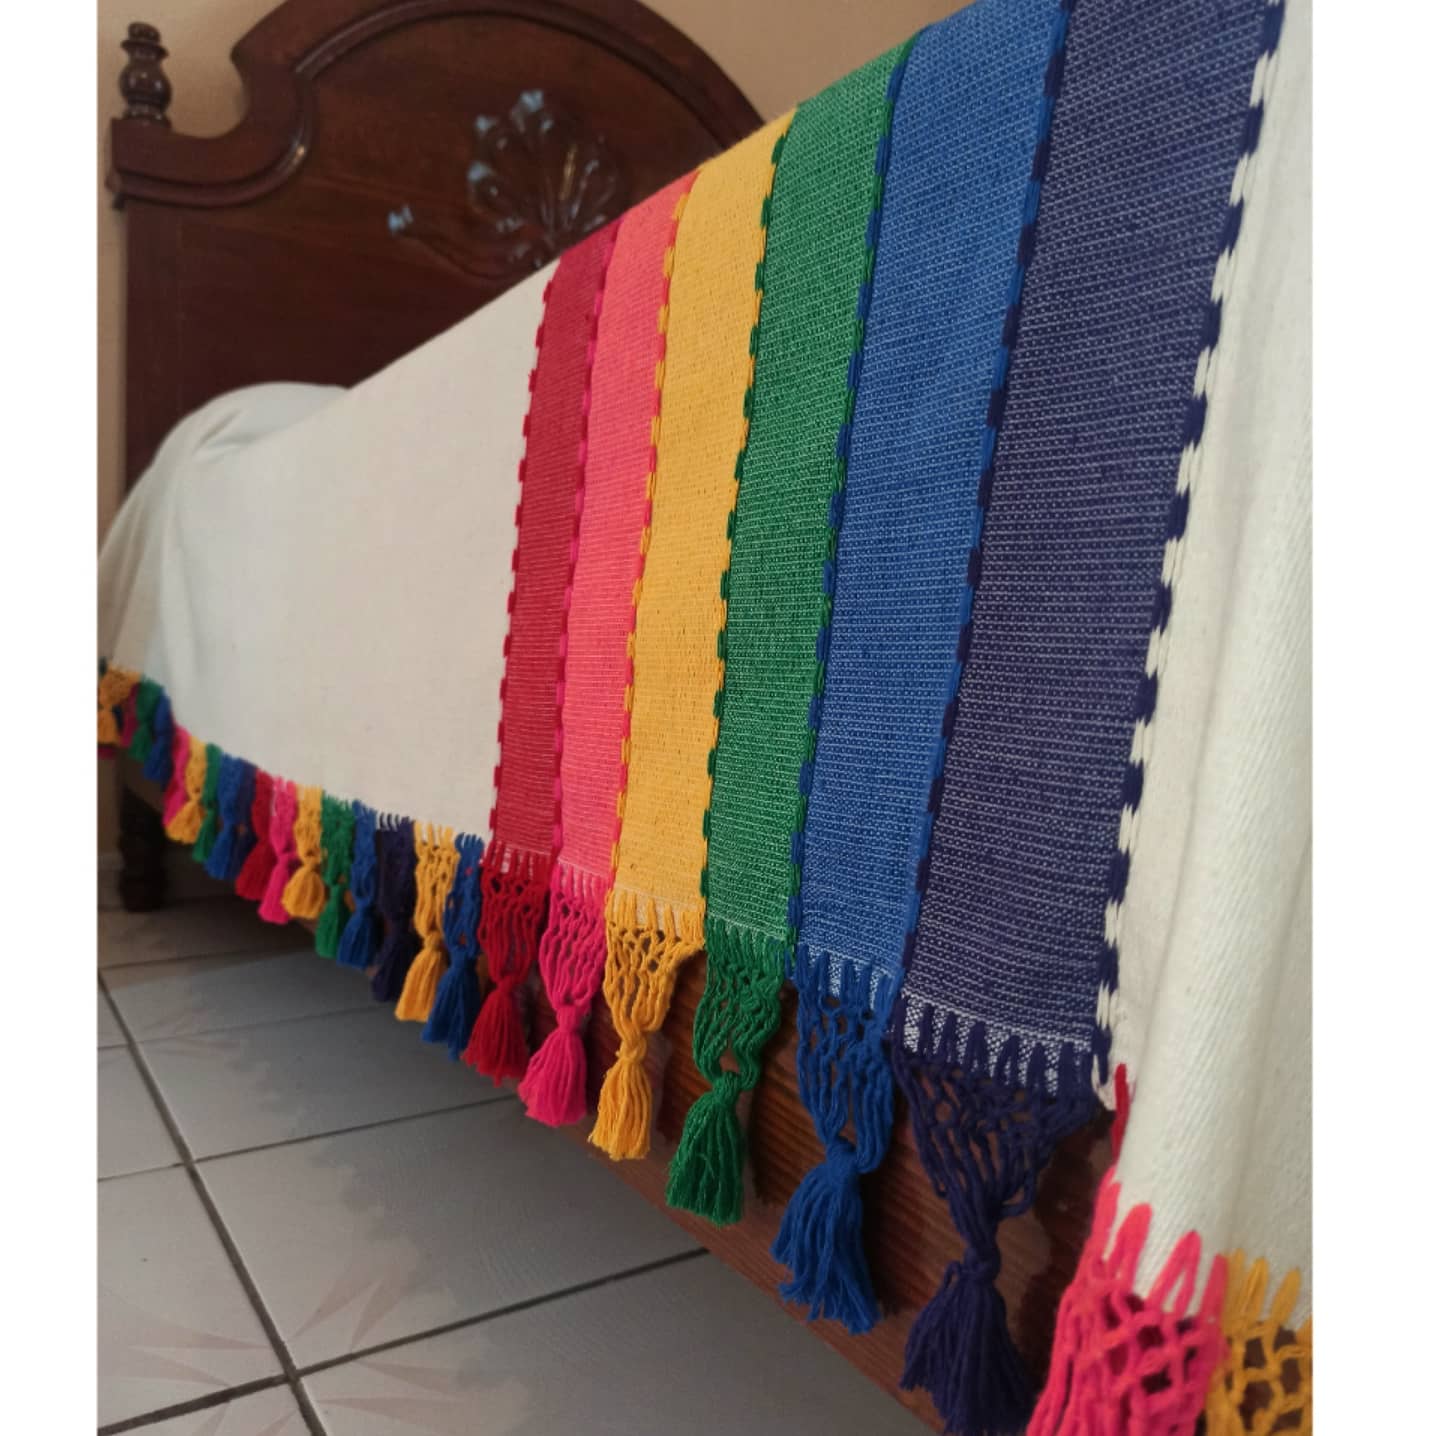 colcha mexicana artesanal modelo pride rainbow. cubrecama multicolot de Oaxaca Mexico